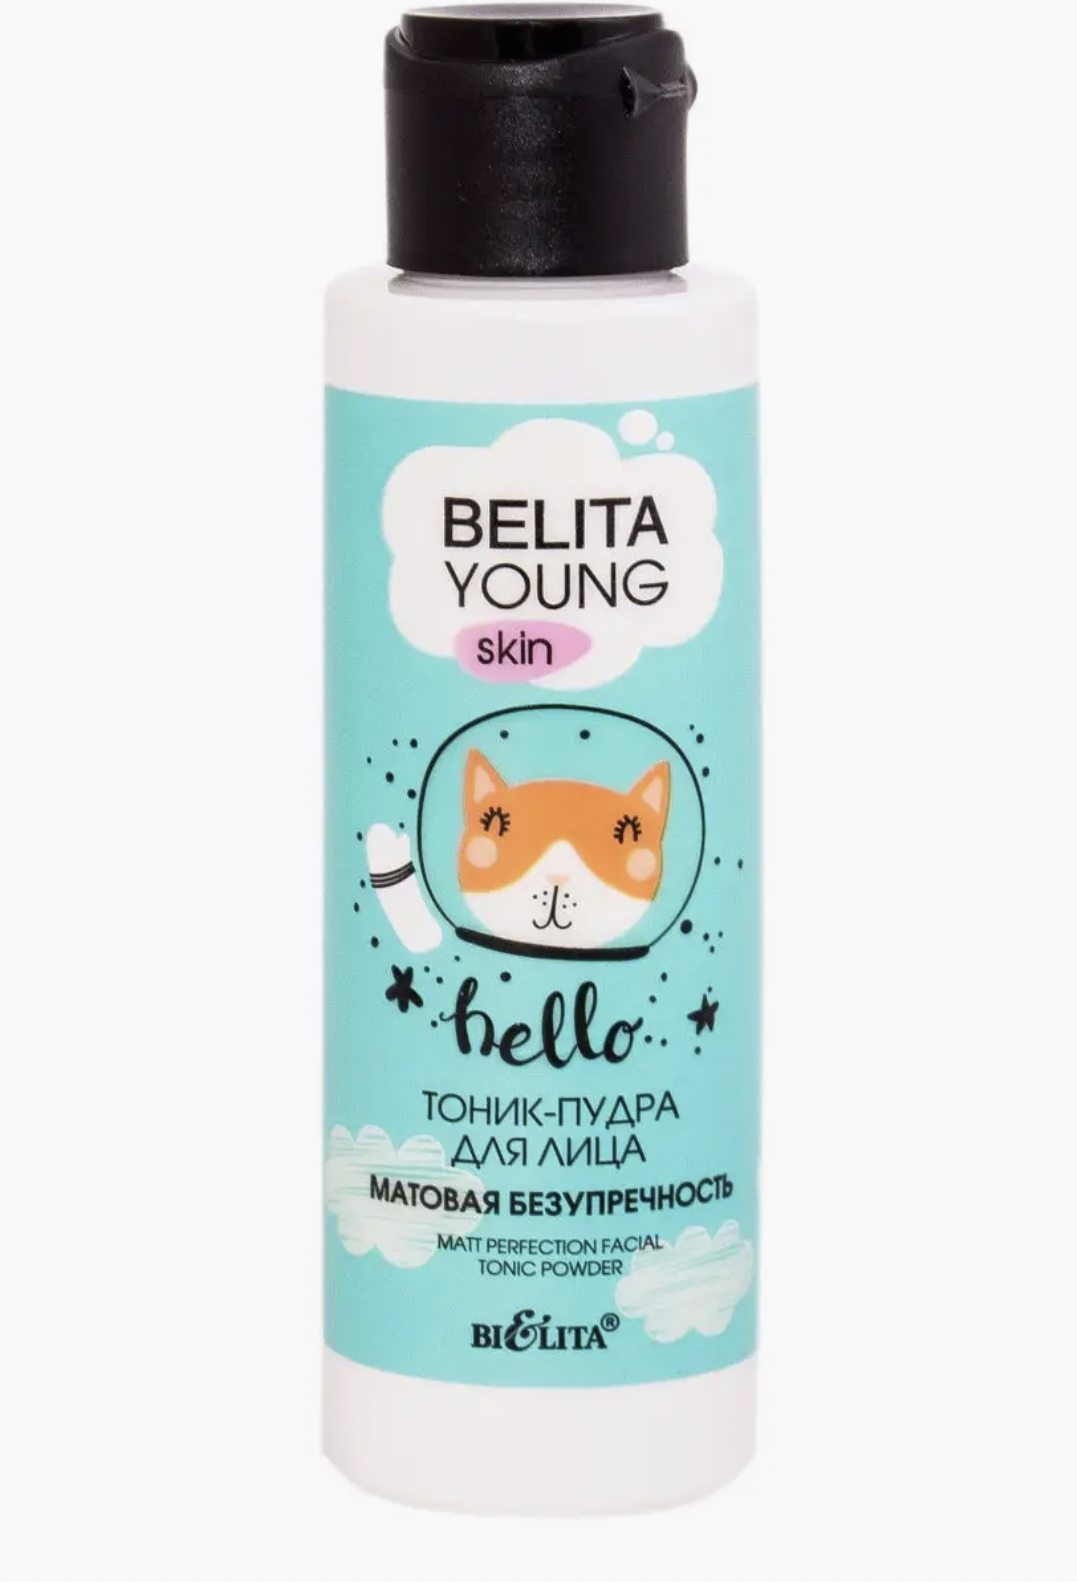   / Belita Young Skin - -   Hello   115 